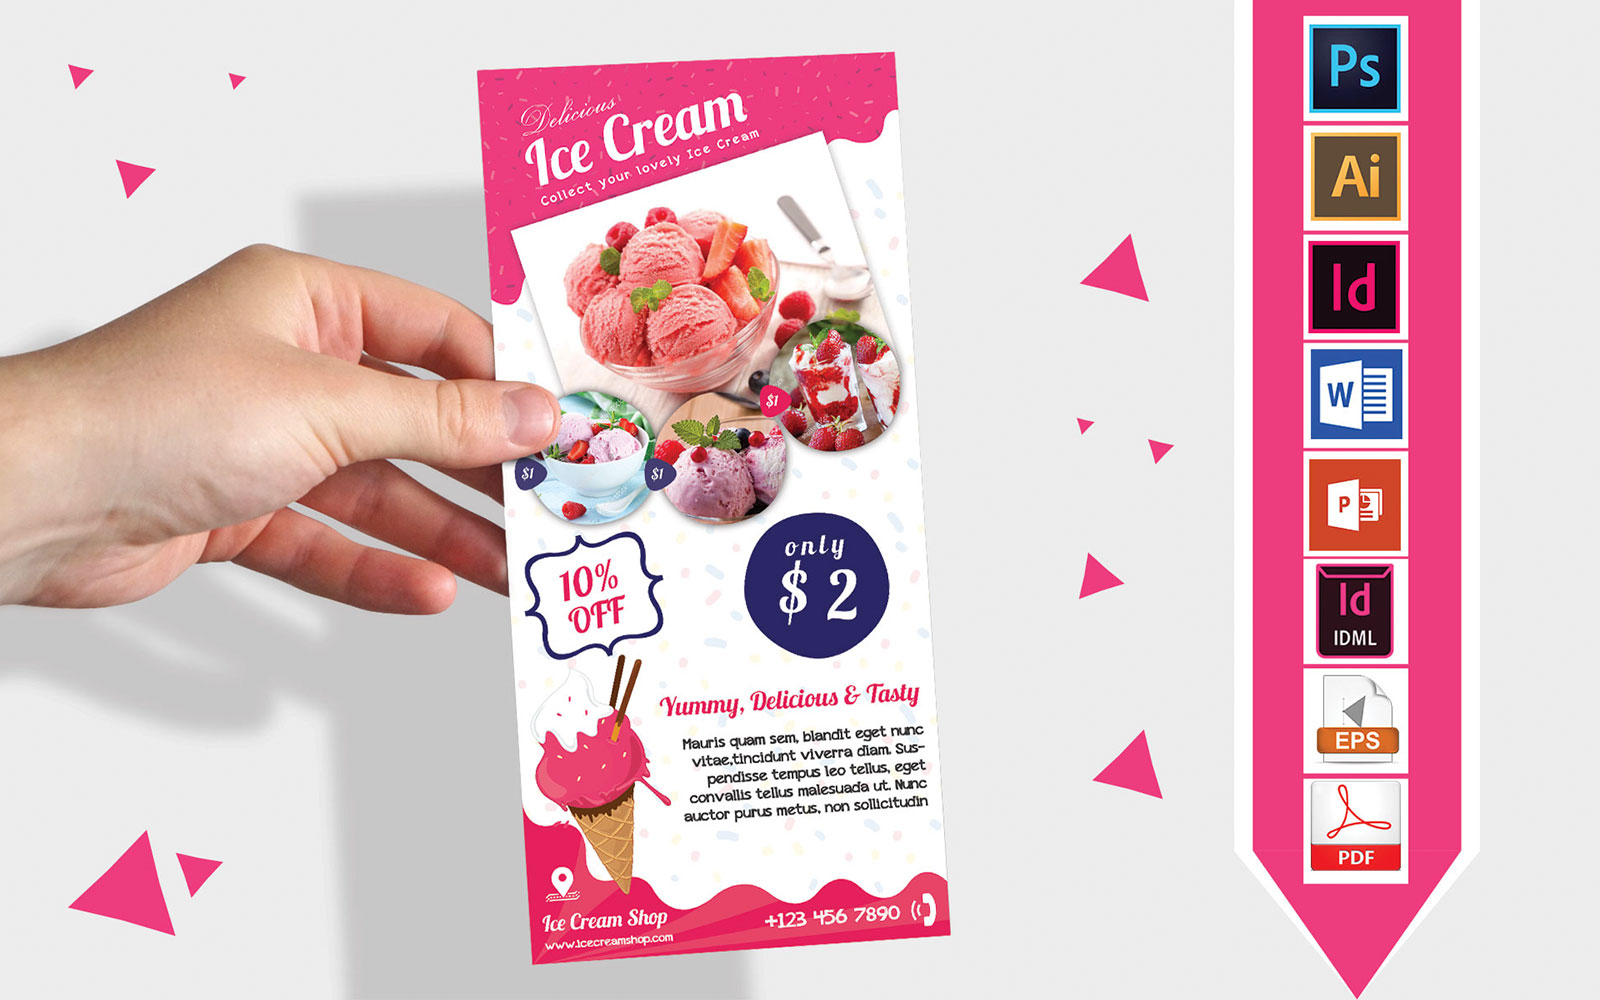 Rack Card | Ice Cream Shop DL Flyer Vol-01 - Corporate Identity Template